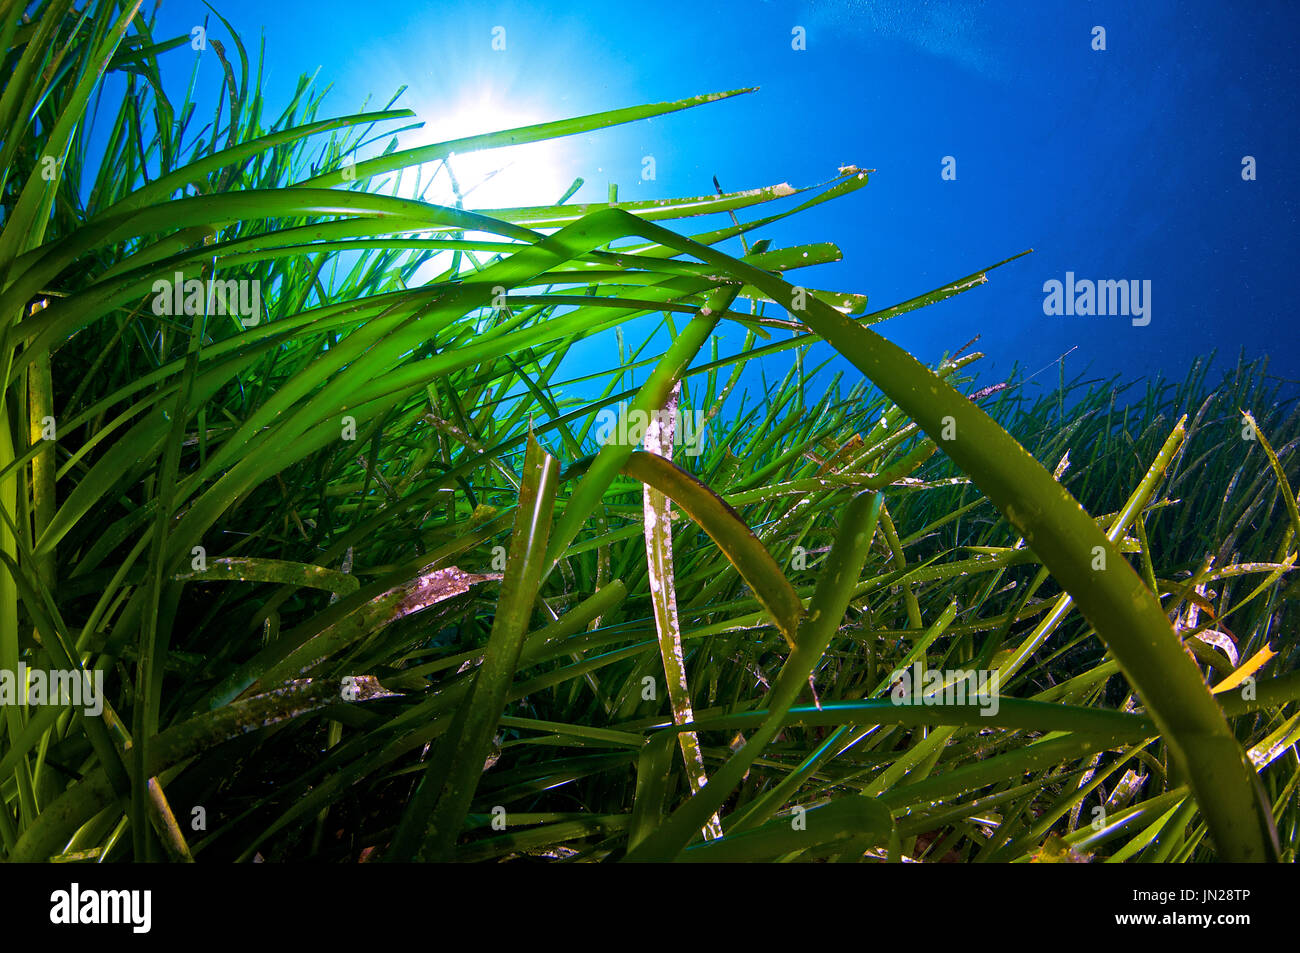 Underwater scene of neptune seagrass (Posidonia oceanica) meadows in Ses Salines Natural Park (Formentera, Balearic Islands, Mediterranean Sea, Spain) Stock Photo